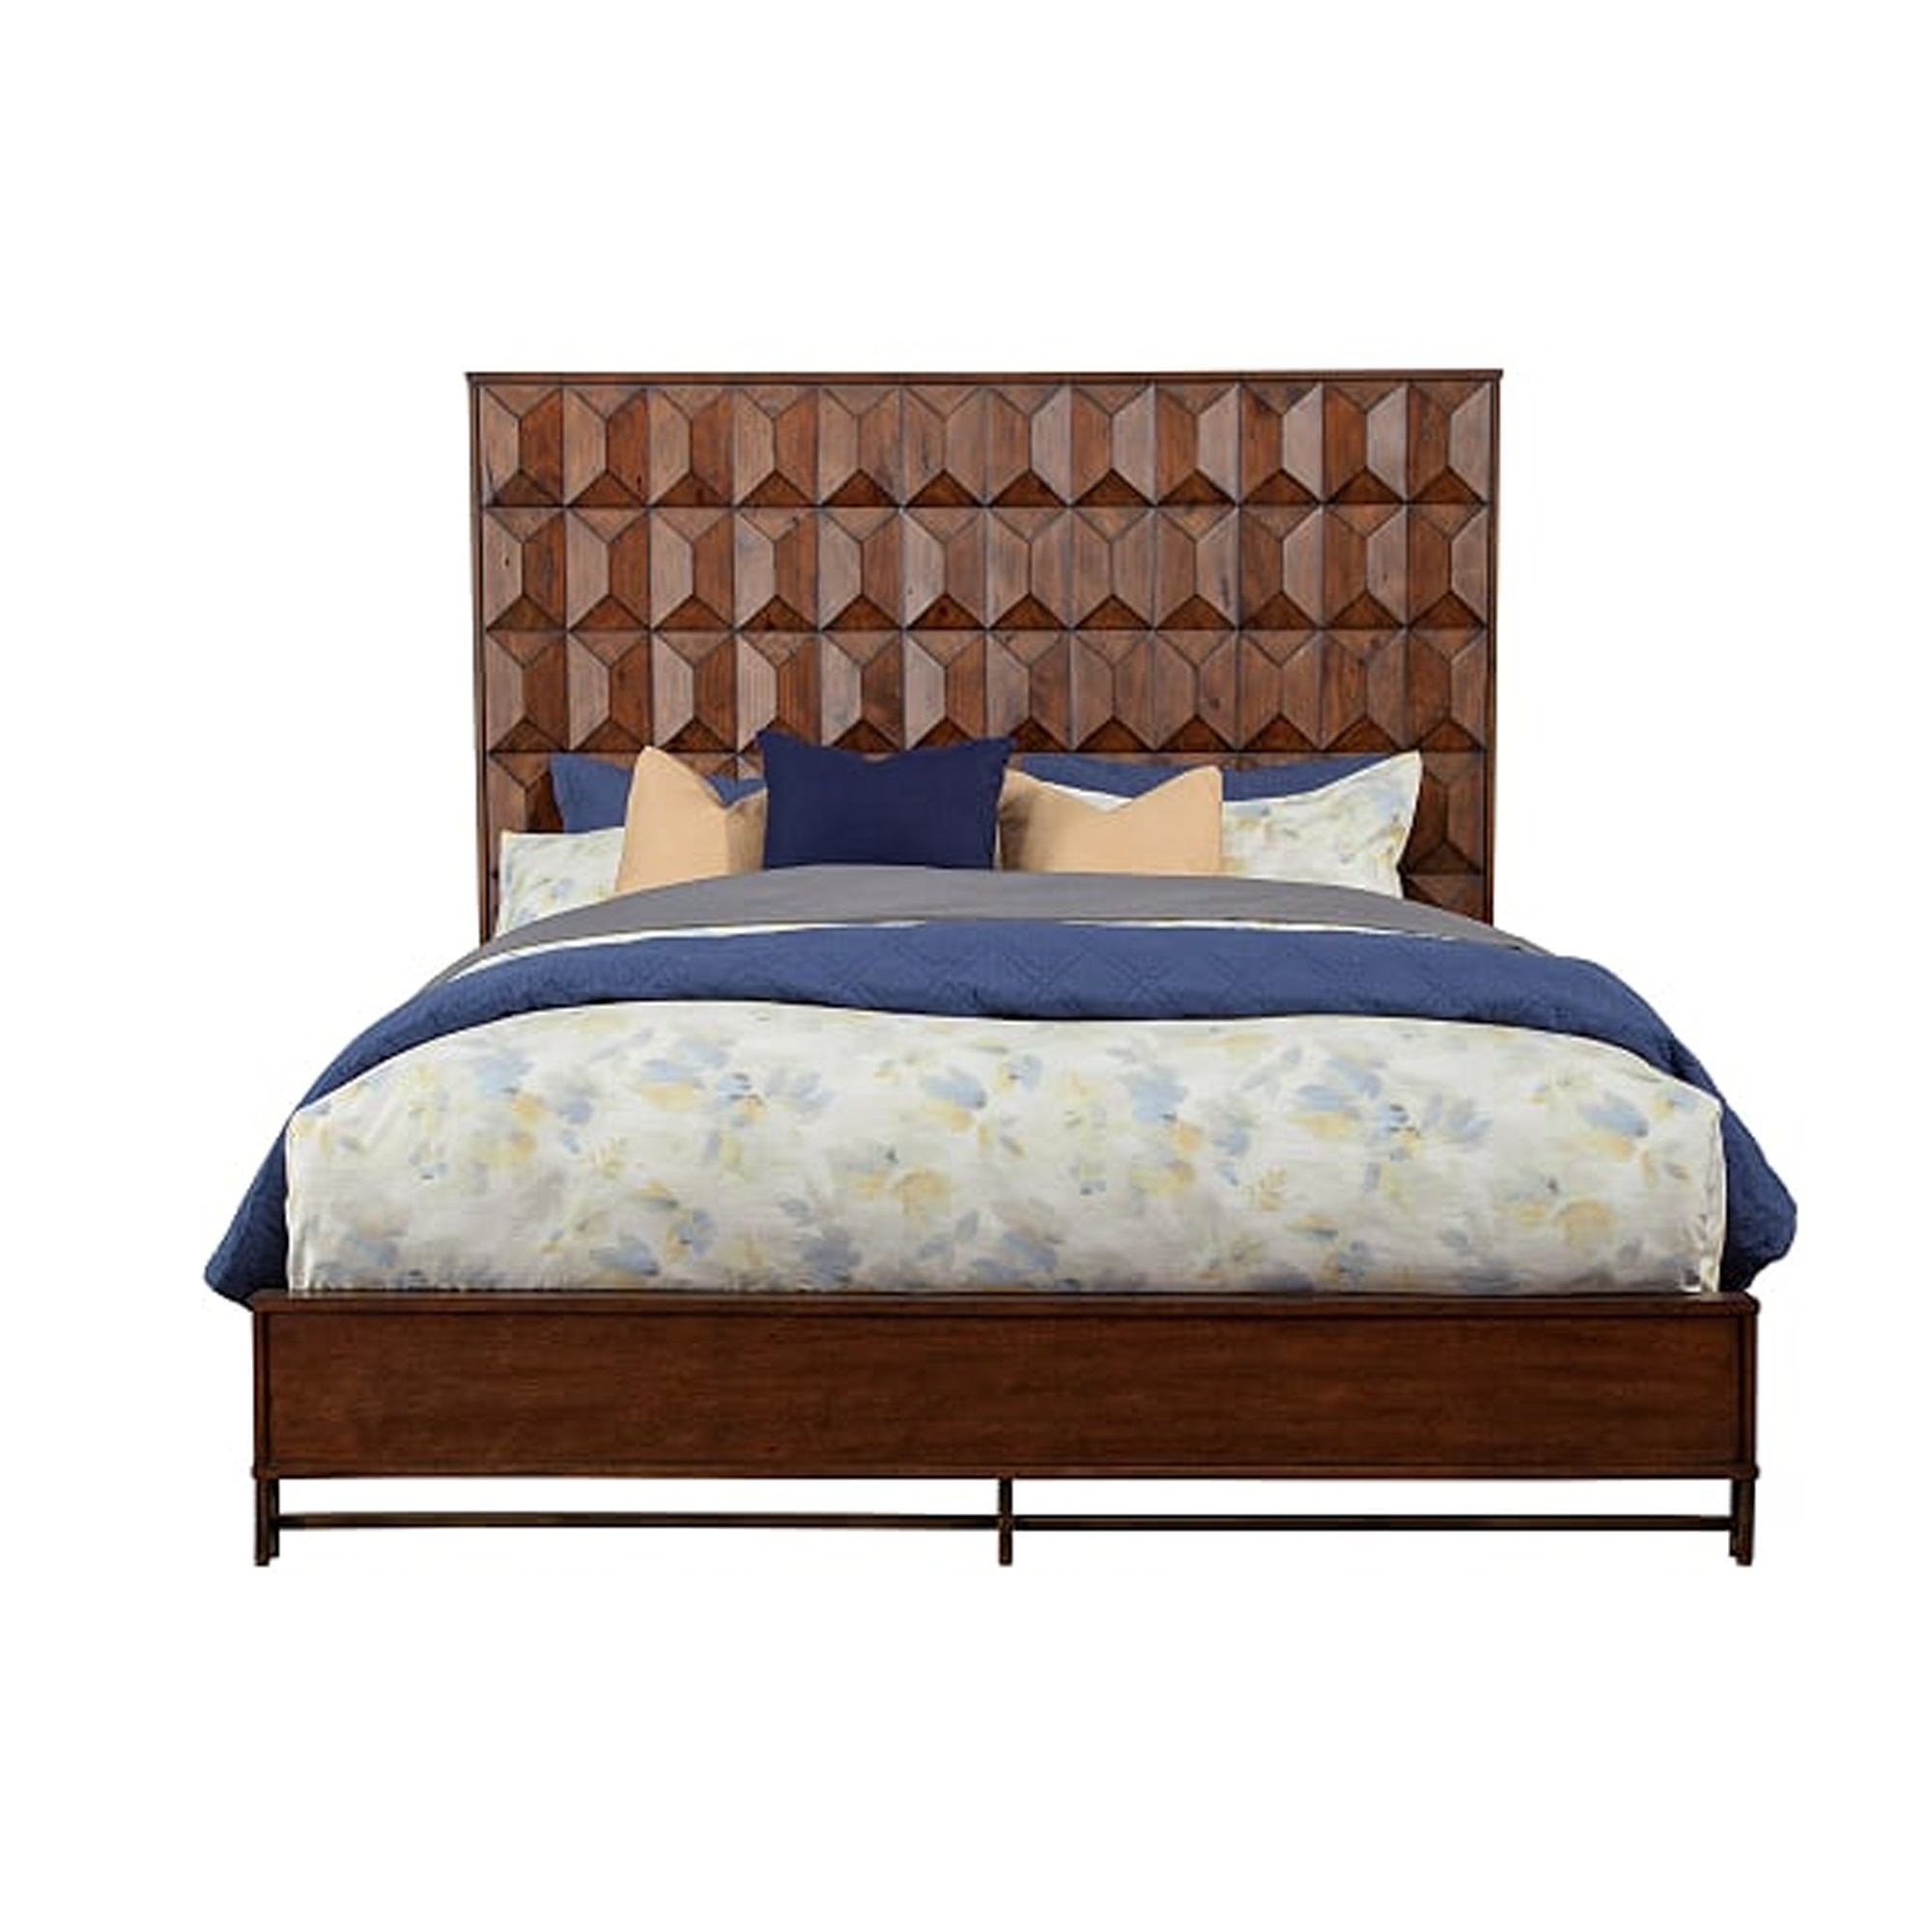 Benzara Wooden Standard King Bed with Honeycomb Design High Headboard, Brown